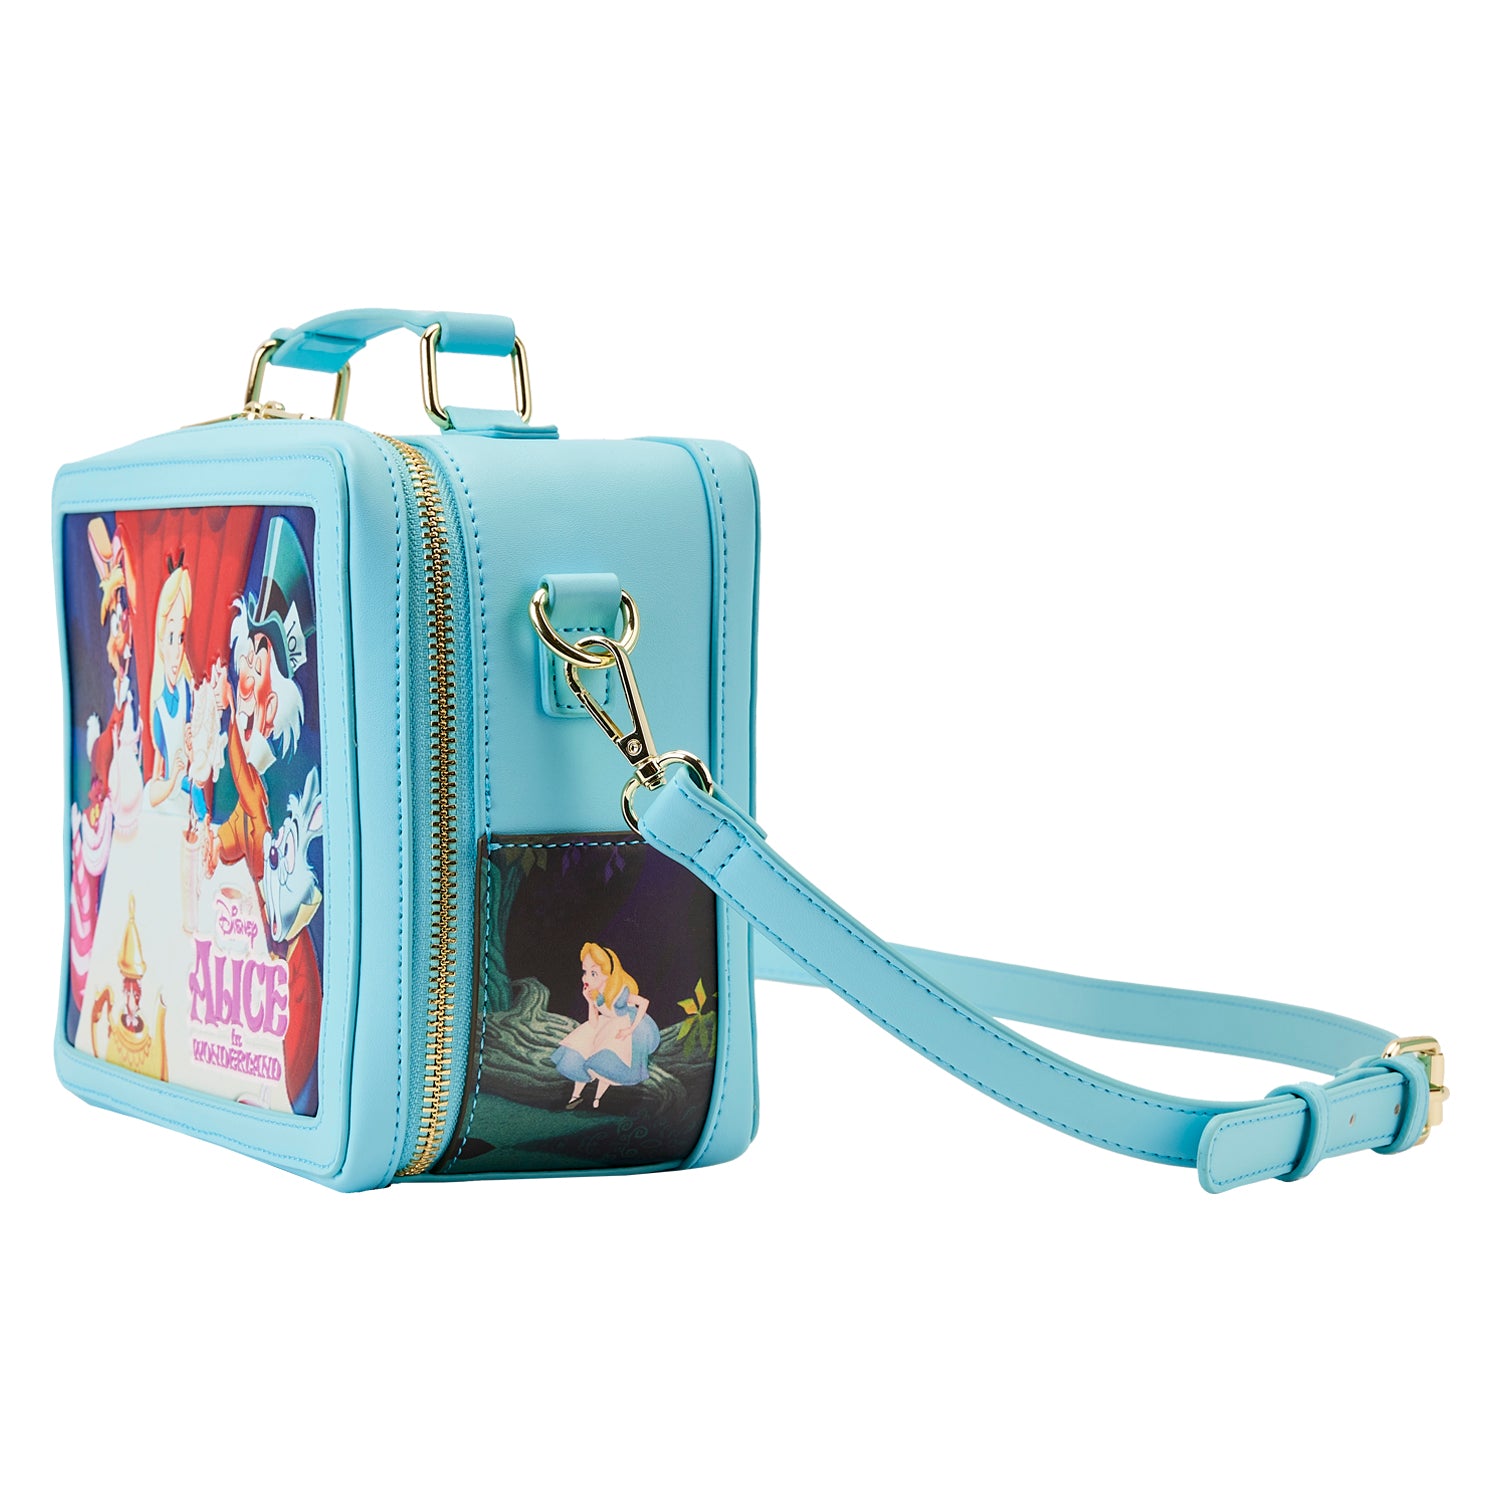 Loungefly x Disney Alice in Wonderland Lunchbox Crossbody Bag